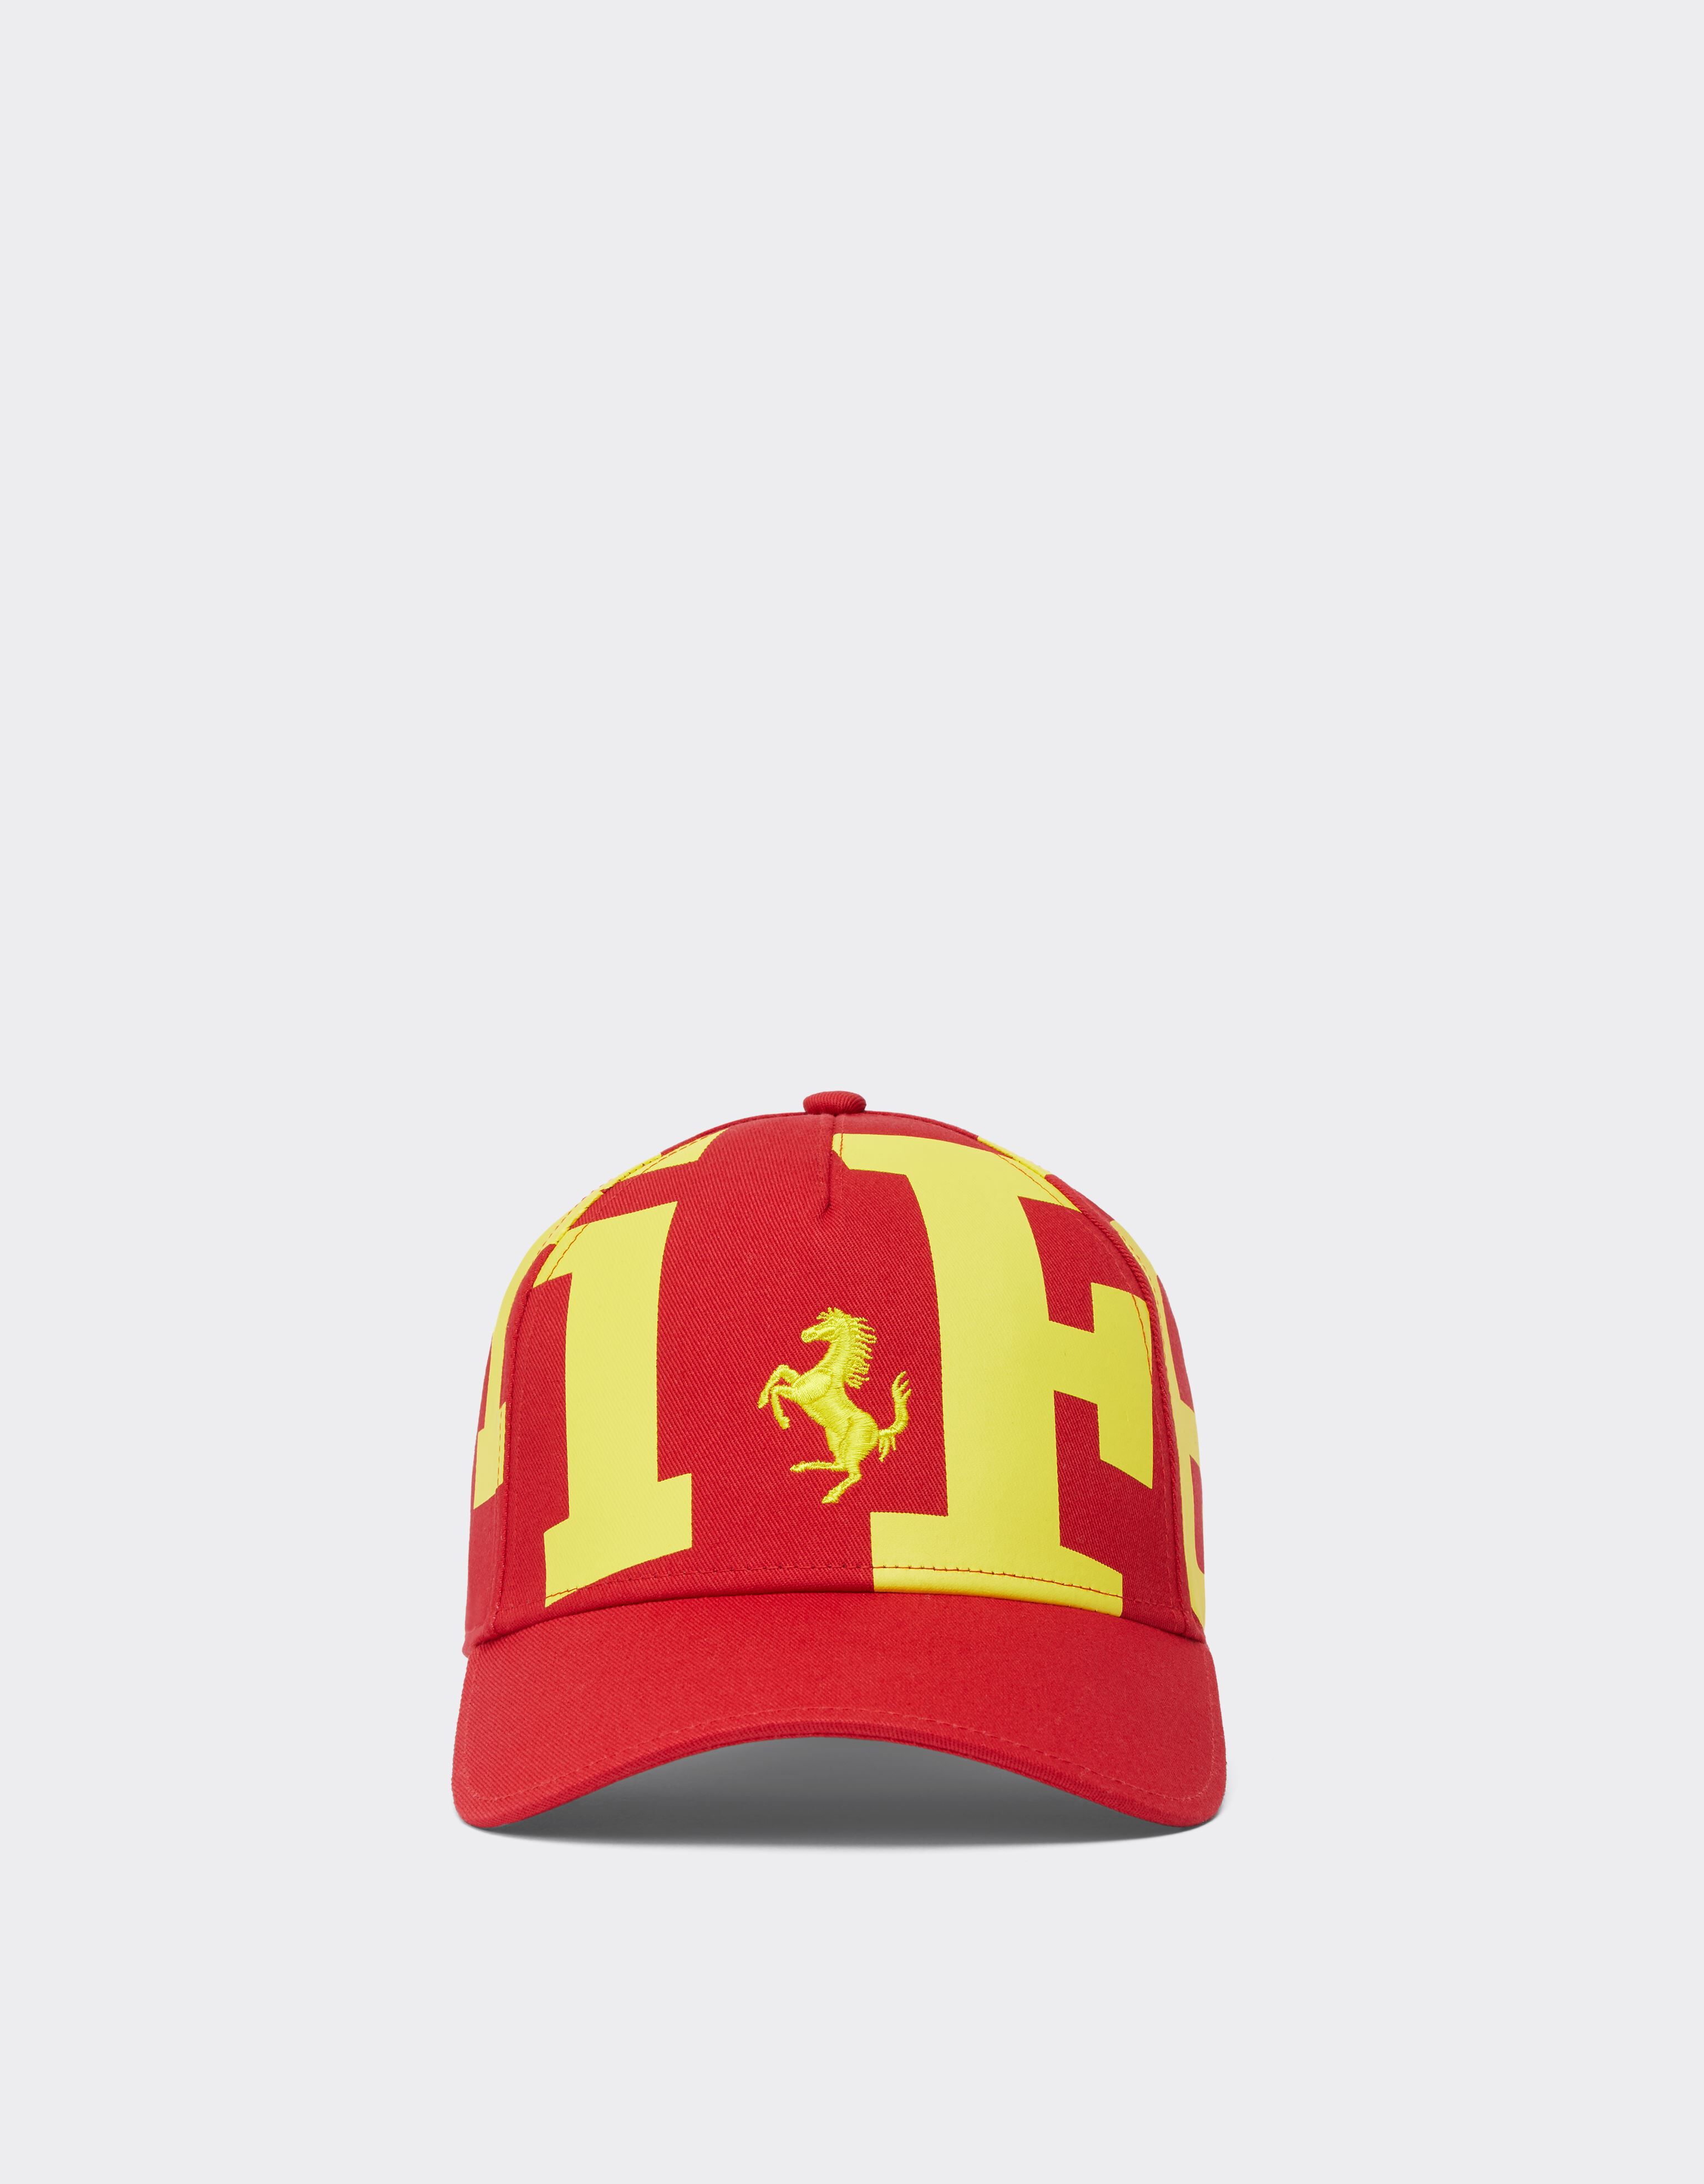 Ferrari Children’s cap with Ferrari logo Rosso Corsa 20160fK